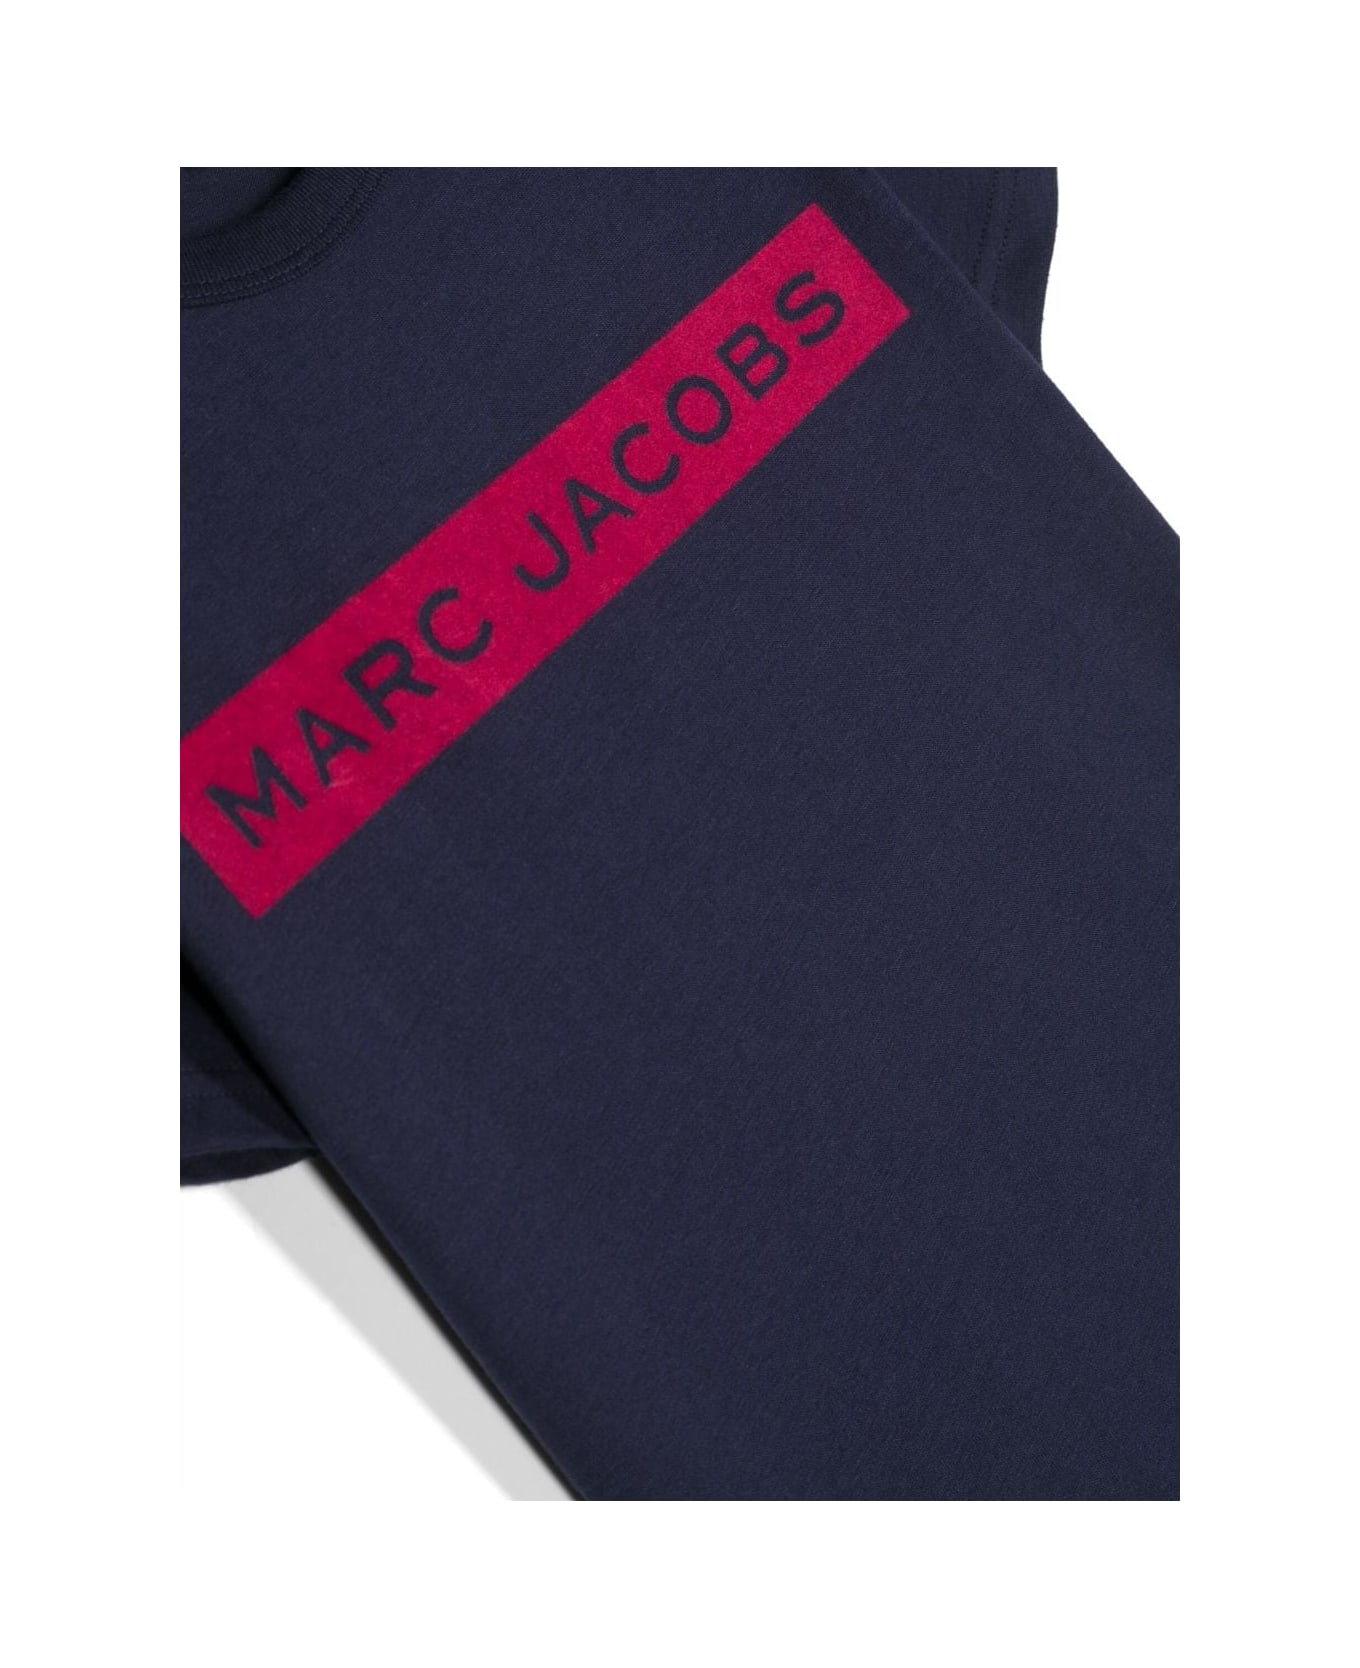 Little Marc Jacobs Marc Jacobs T-shirt Blu Navy In Jersey Di Cotone Bambino - Blu